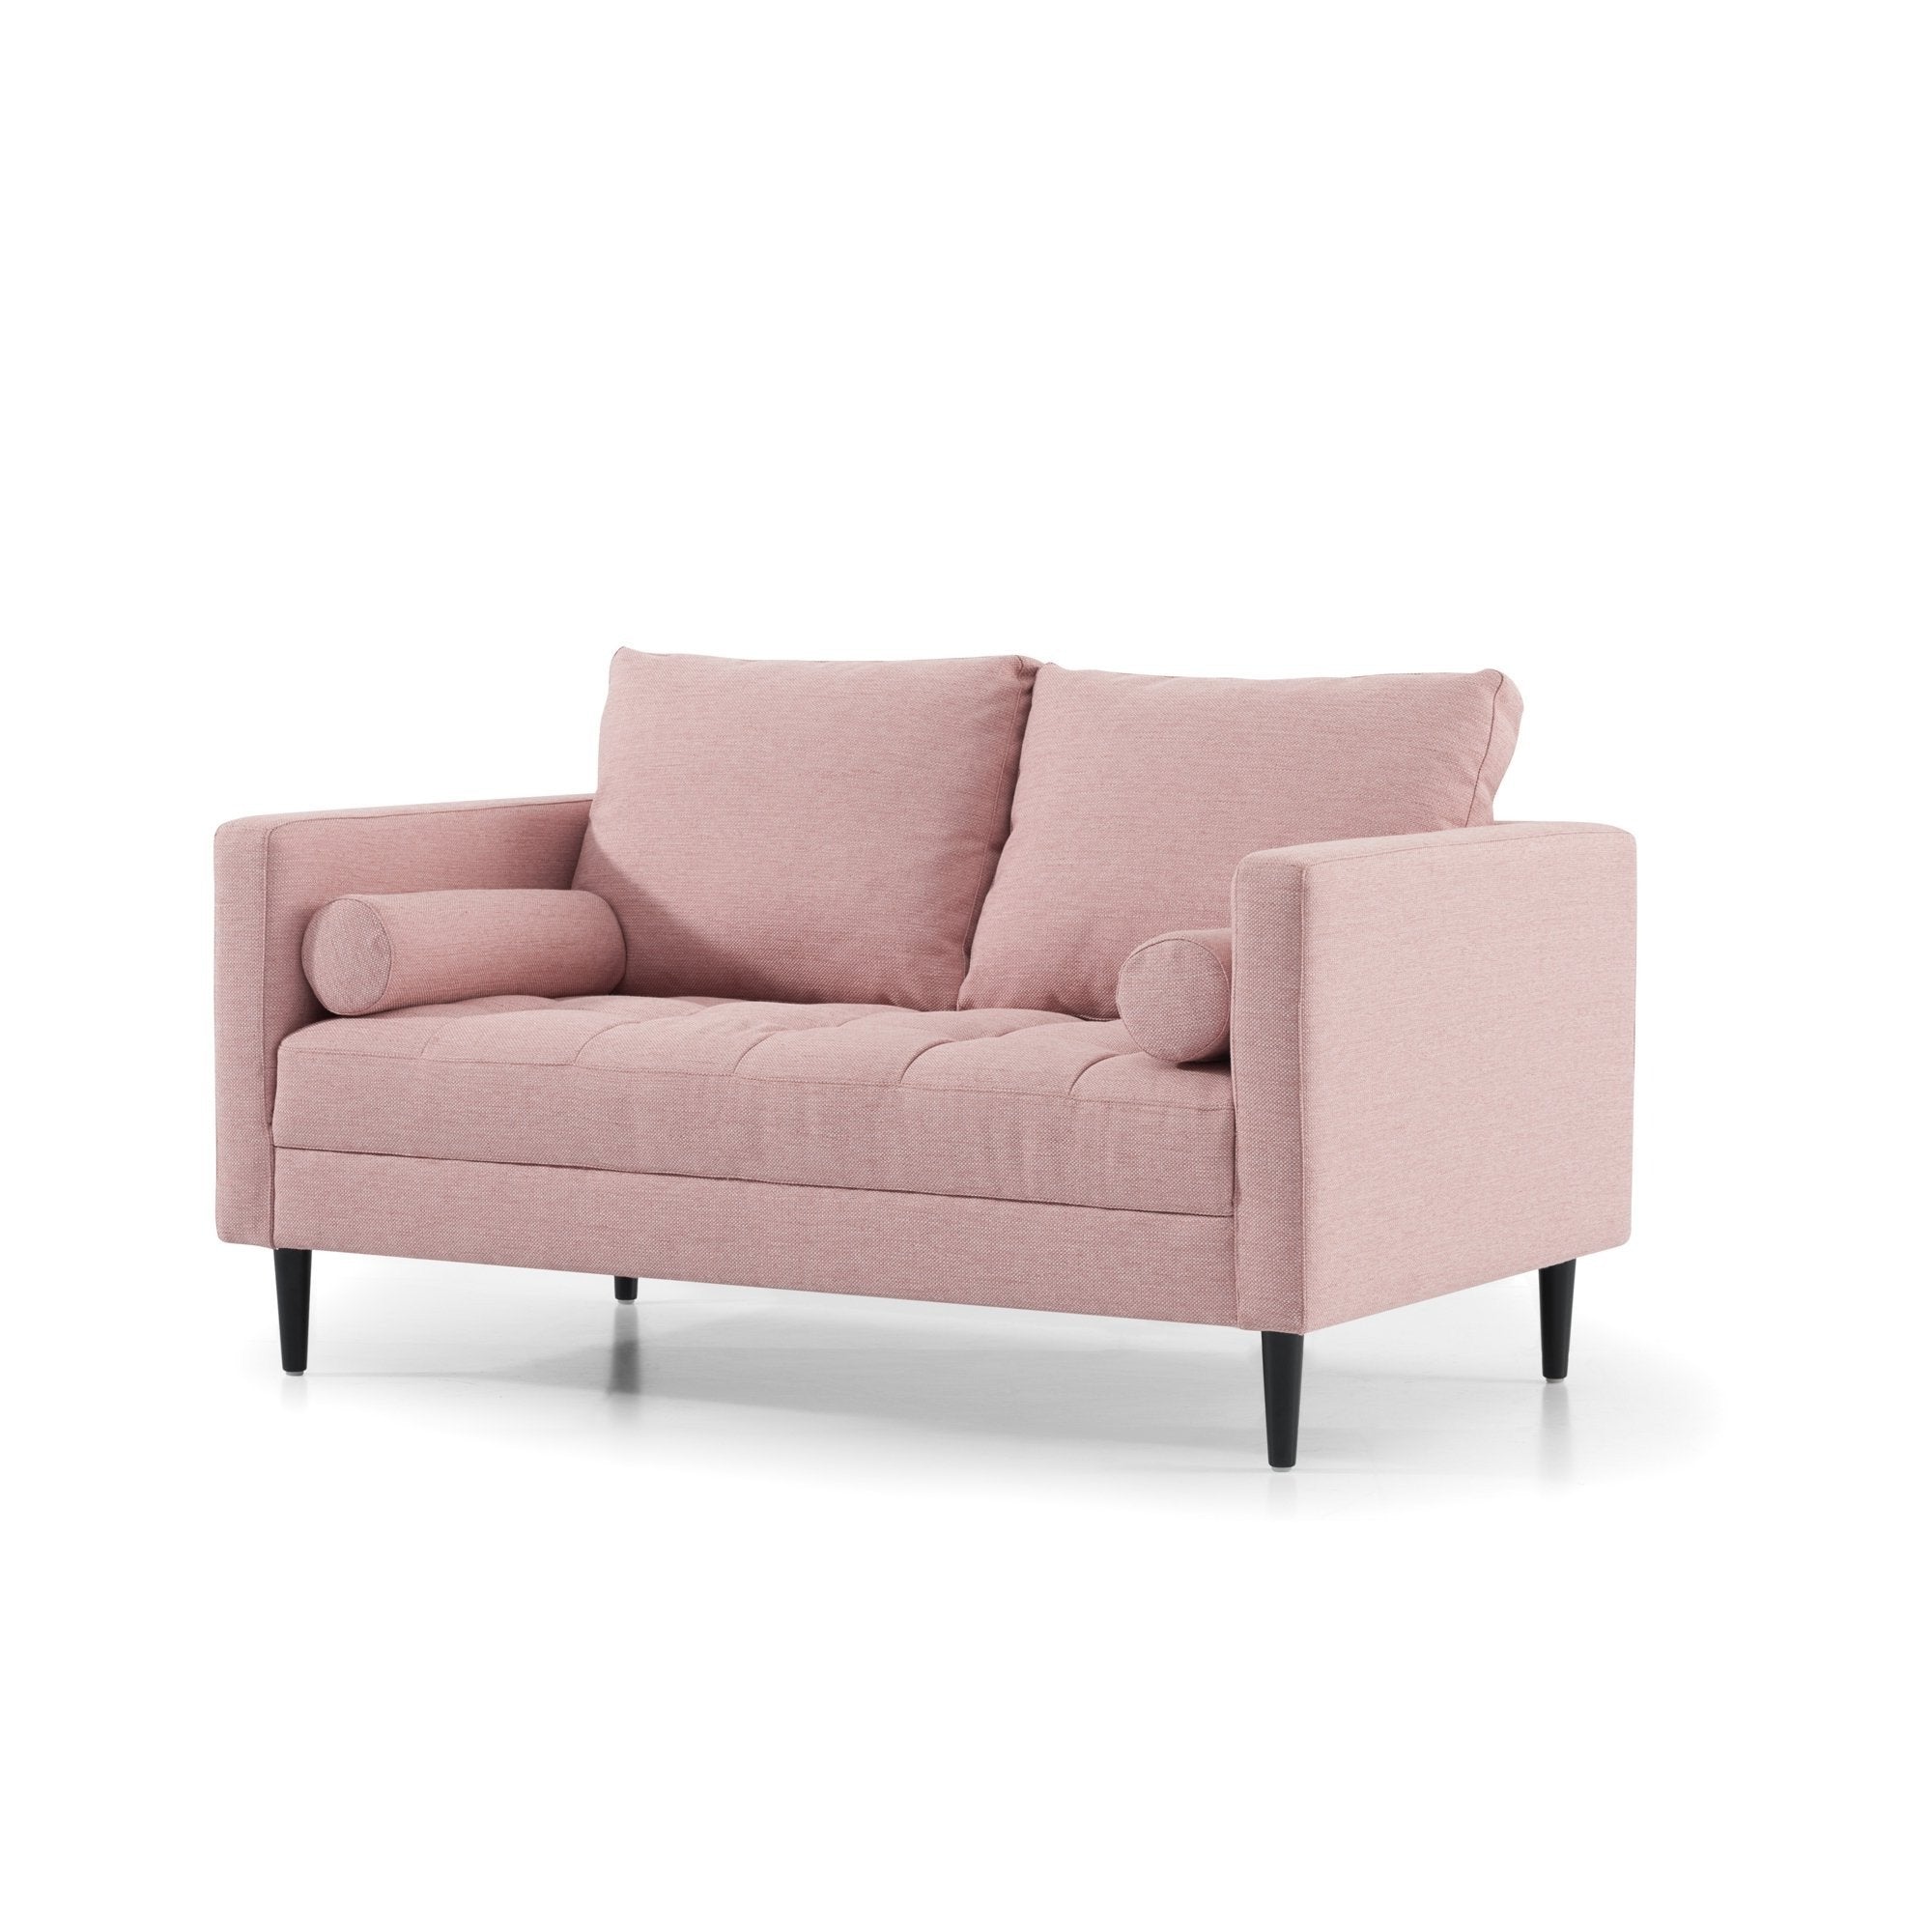 Ava 2 Seater - Texture Blush Fabric Sofa with Black Legs